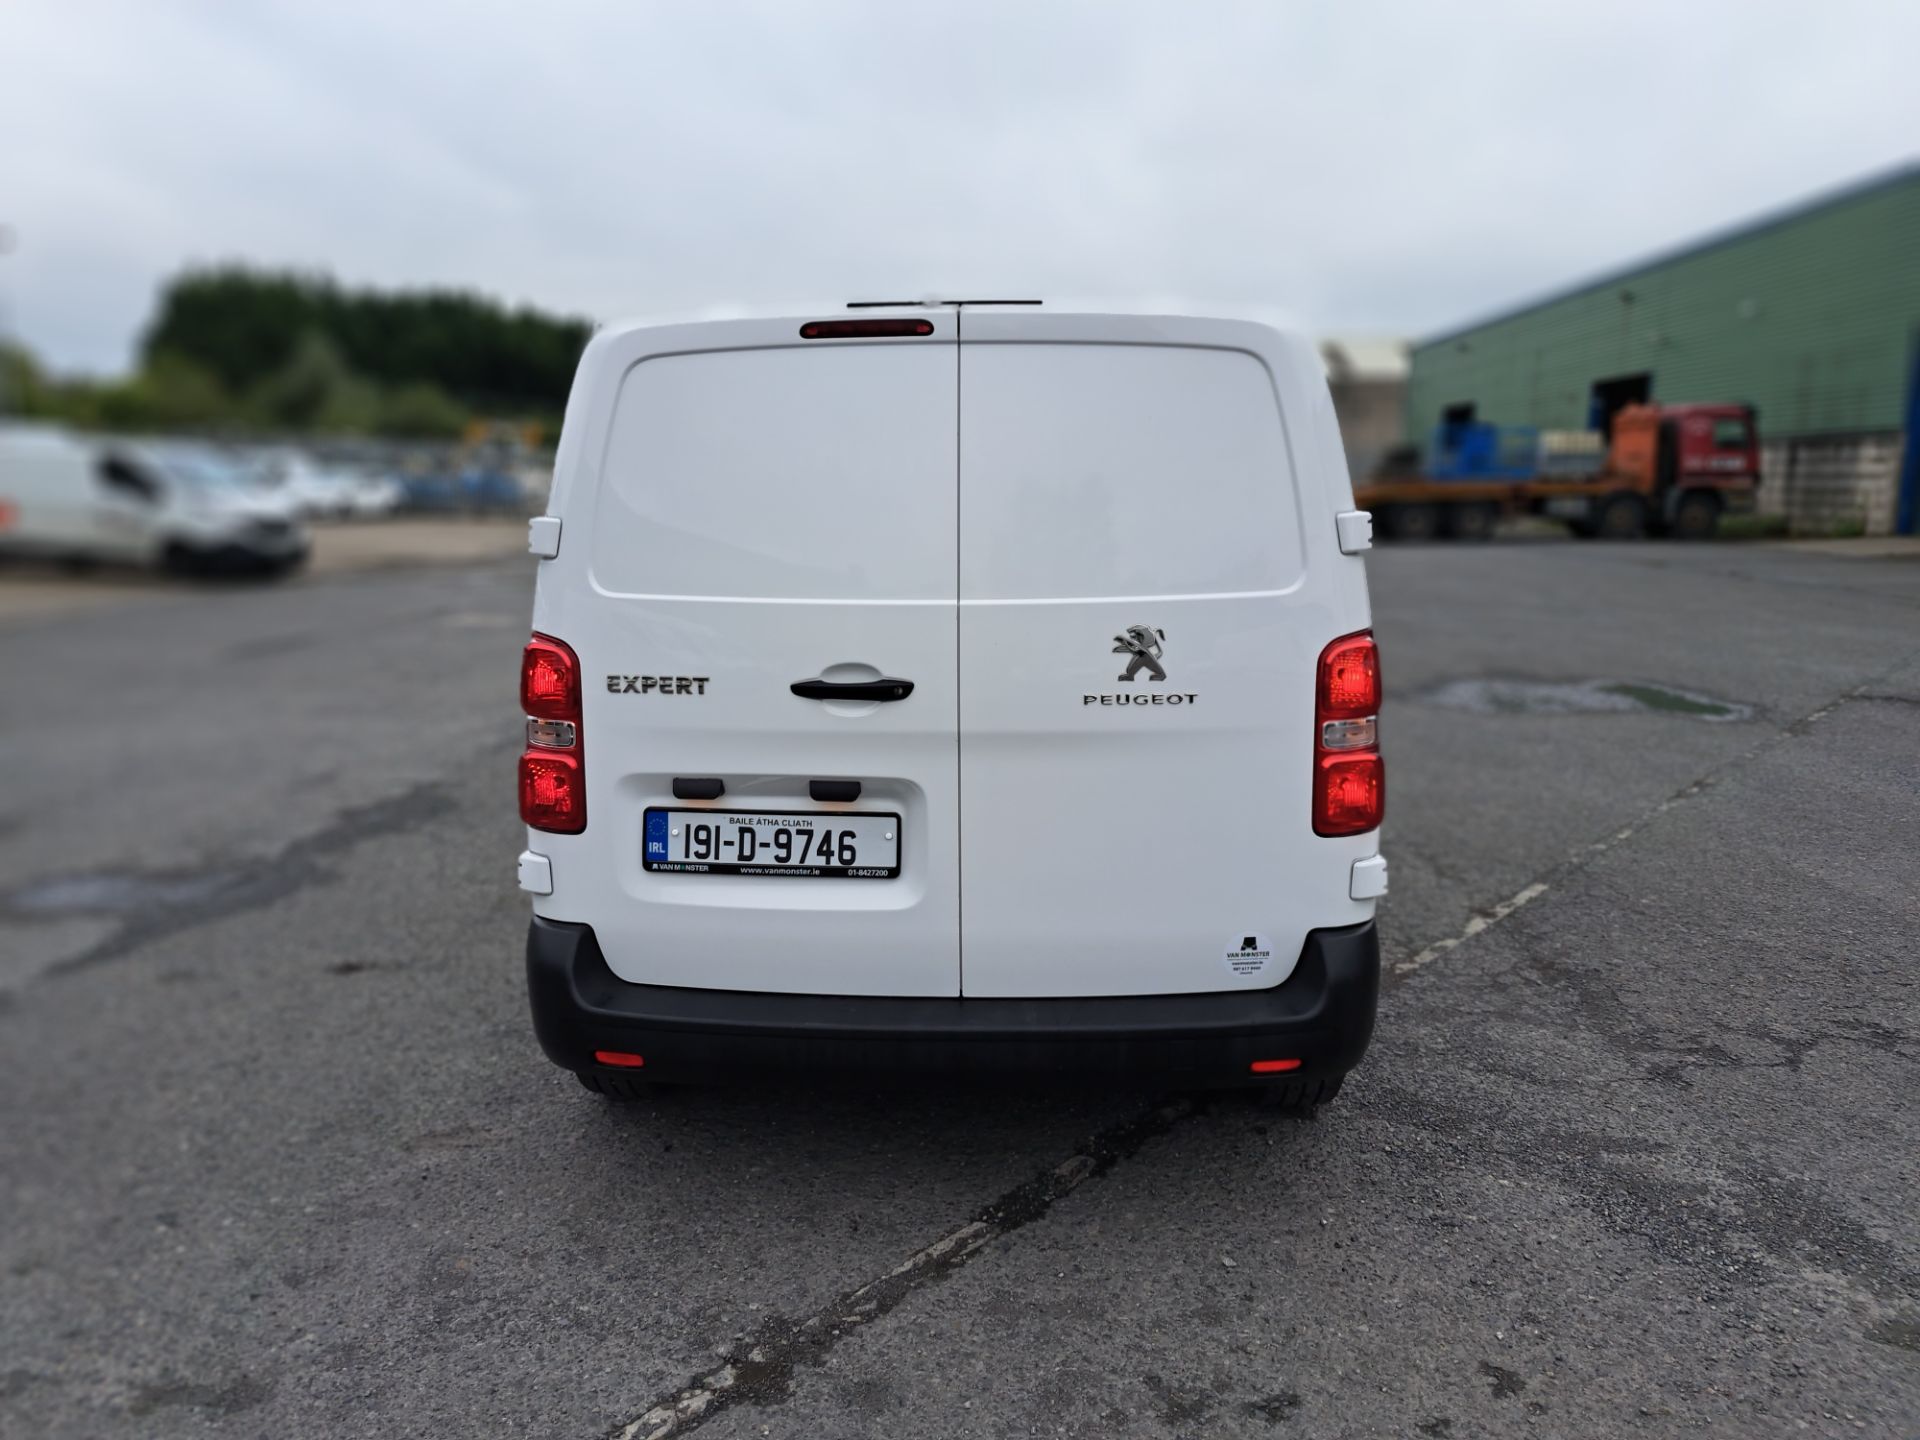 2019 Peugeot Expert Active Standard 1.6 Blue HDI 9 (191D9746) Image 4